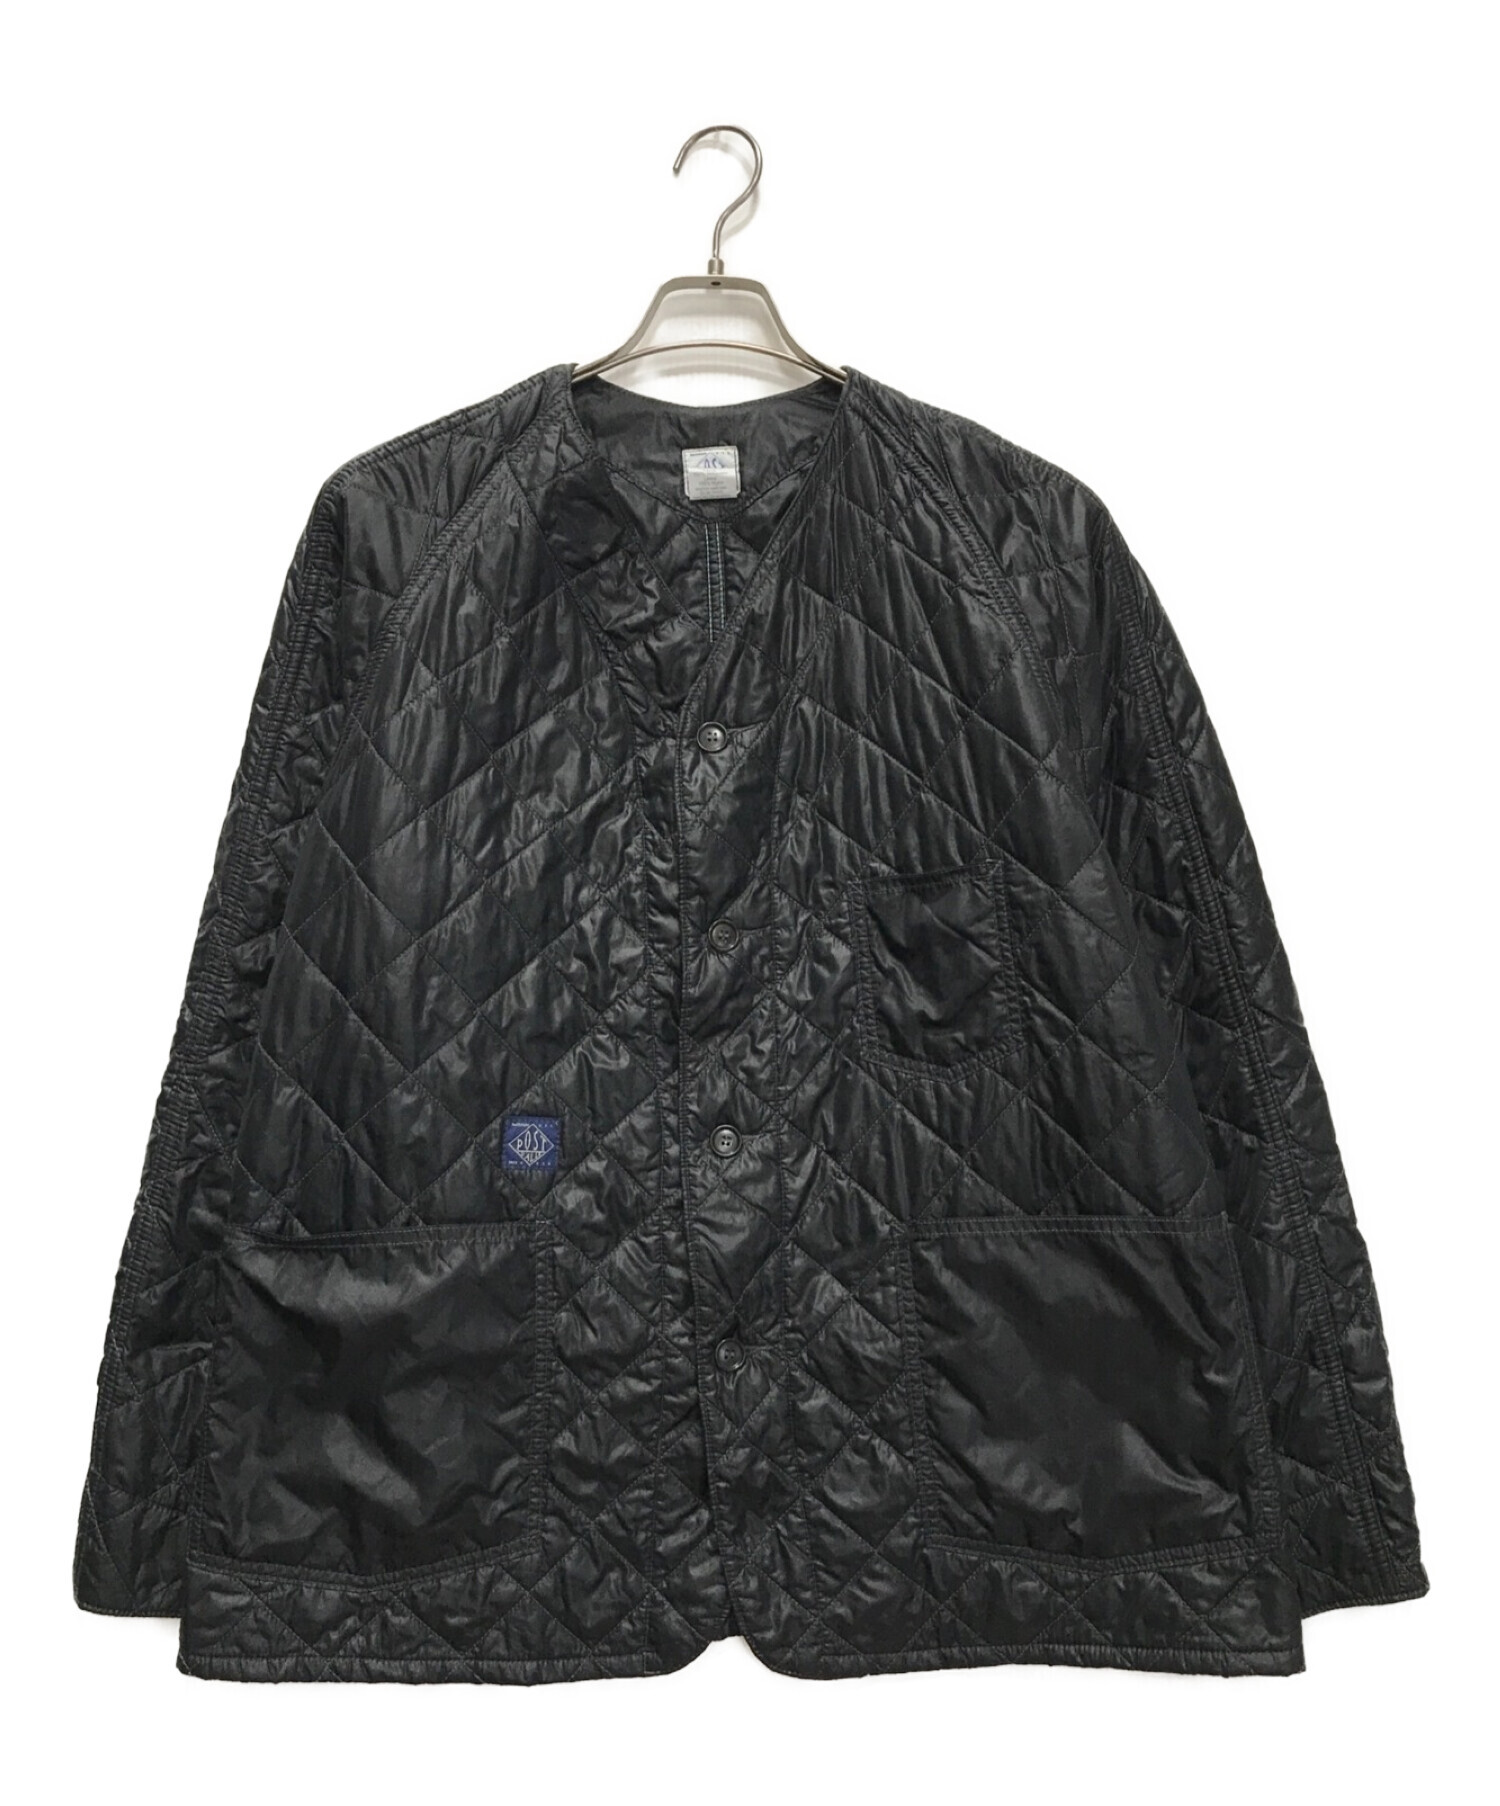 POST O'ALLS (ポストオーバーオールズ) ジャケット ブラック サイズ:XL